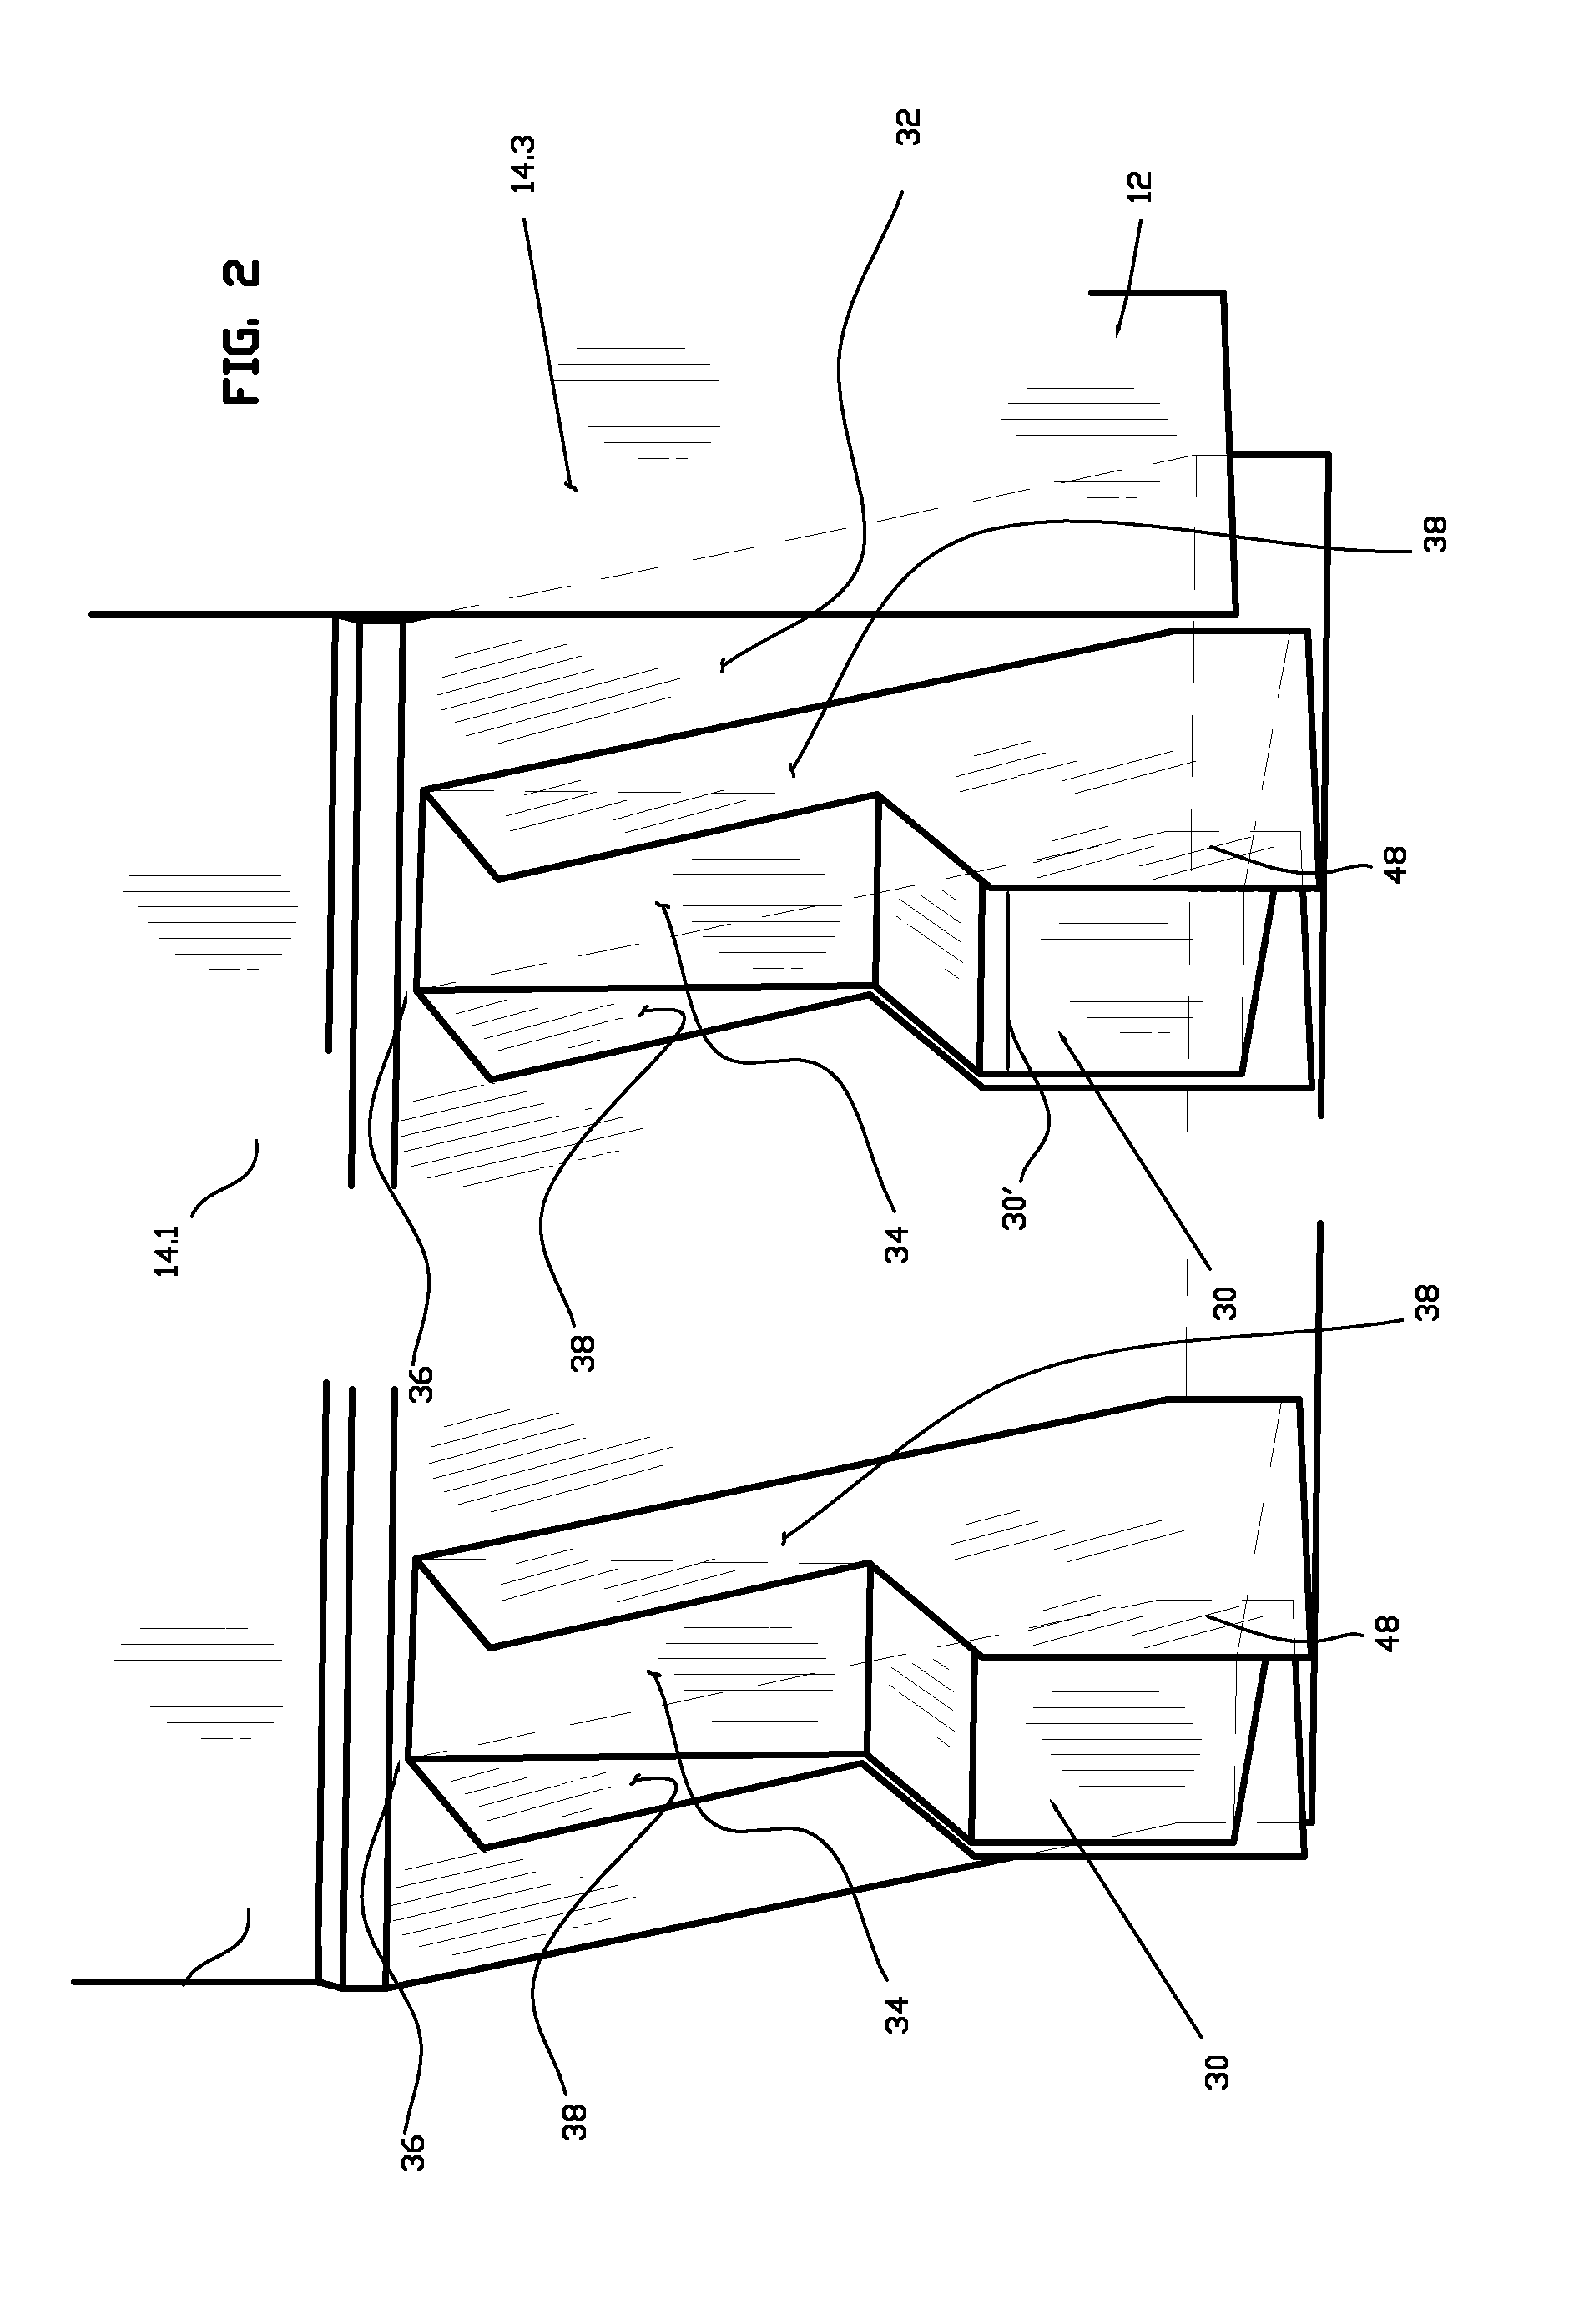 Fluidized bed reactor arrangement